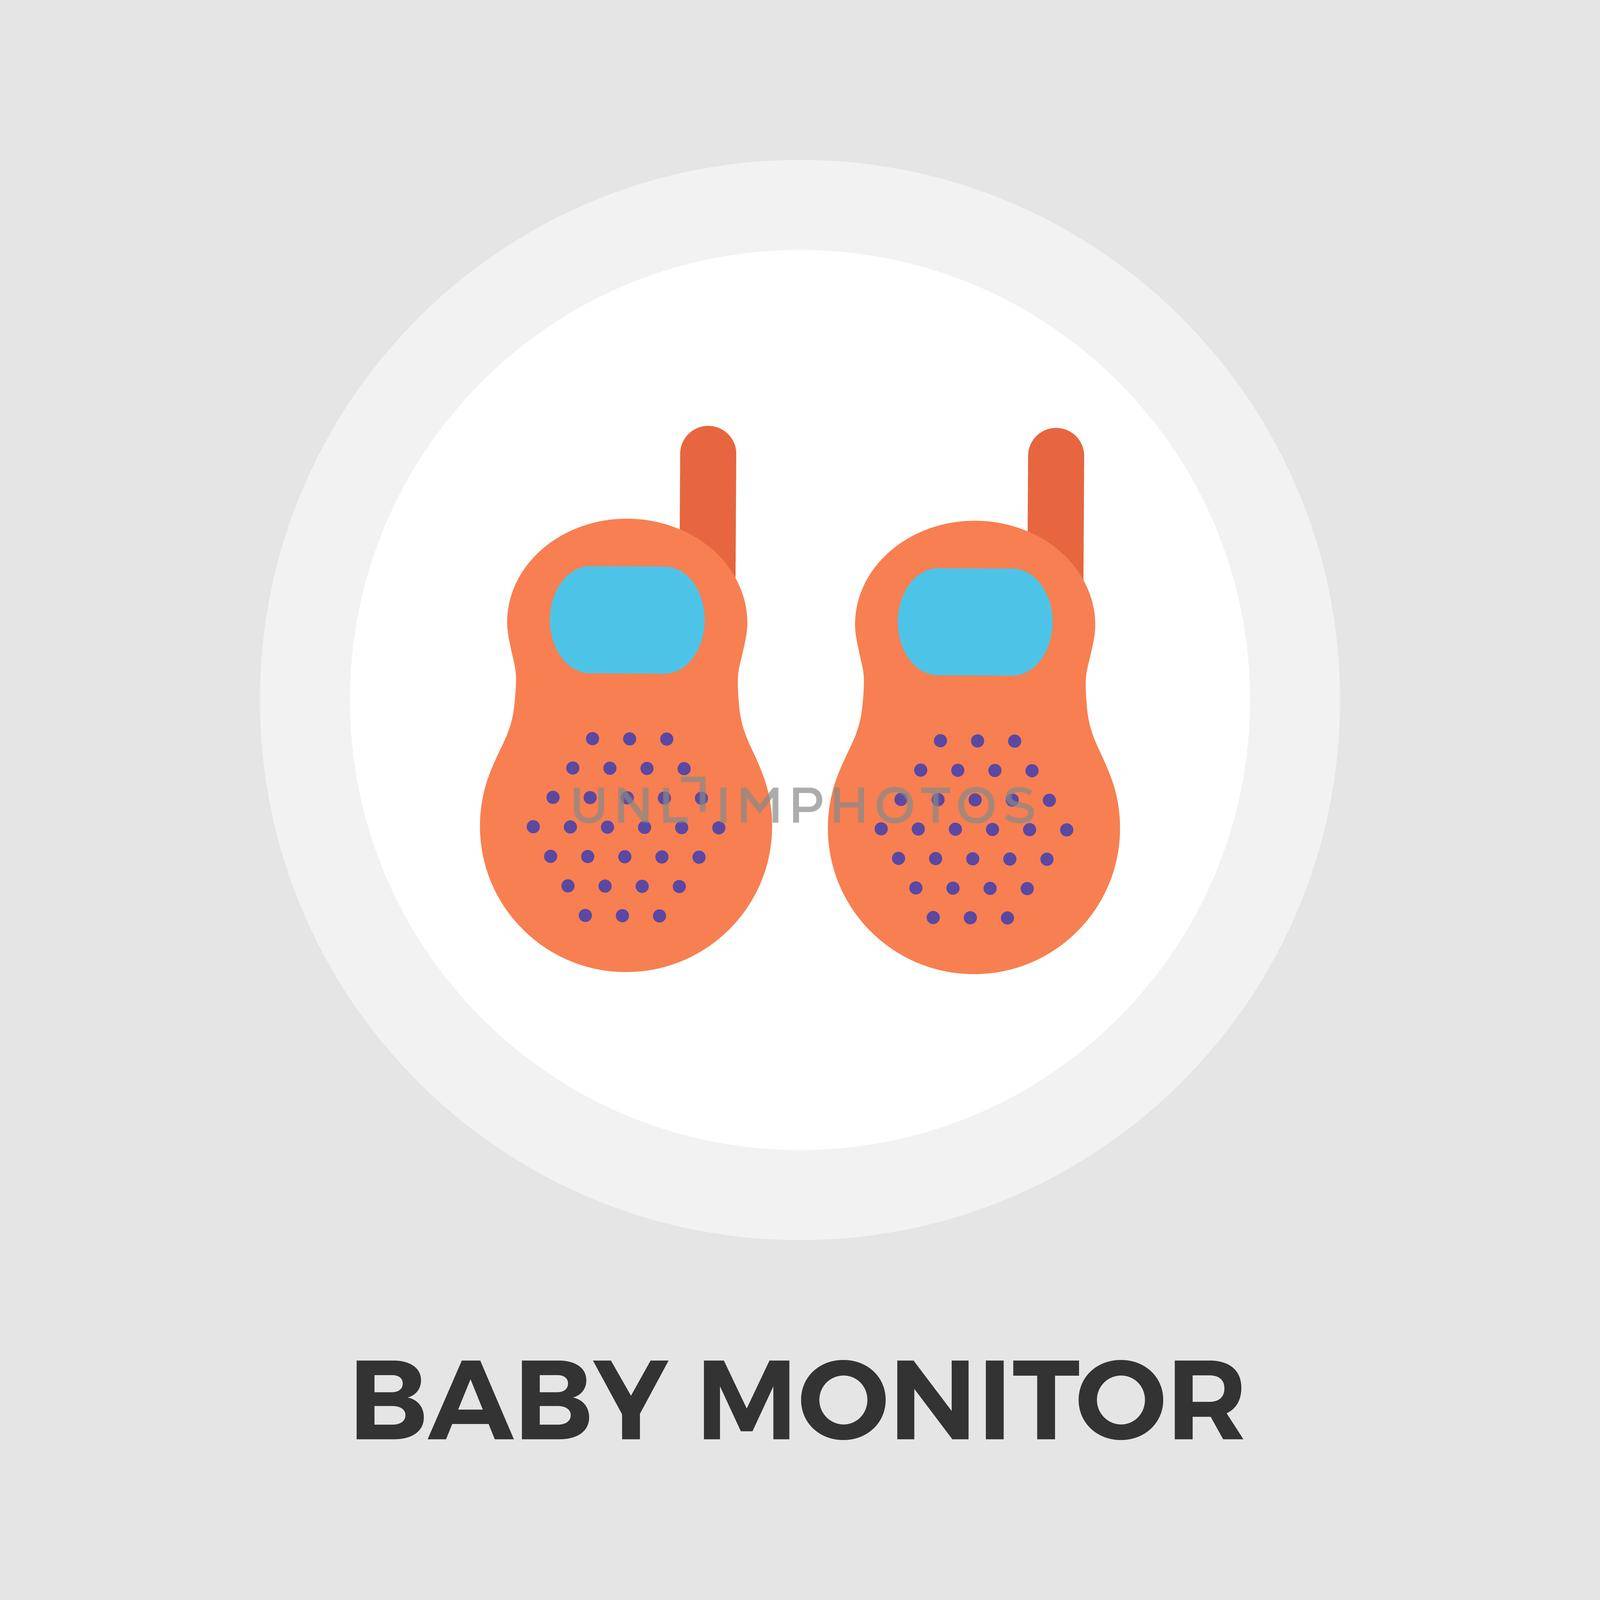 Baby monitor Flat Icon by smoki